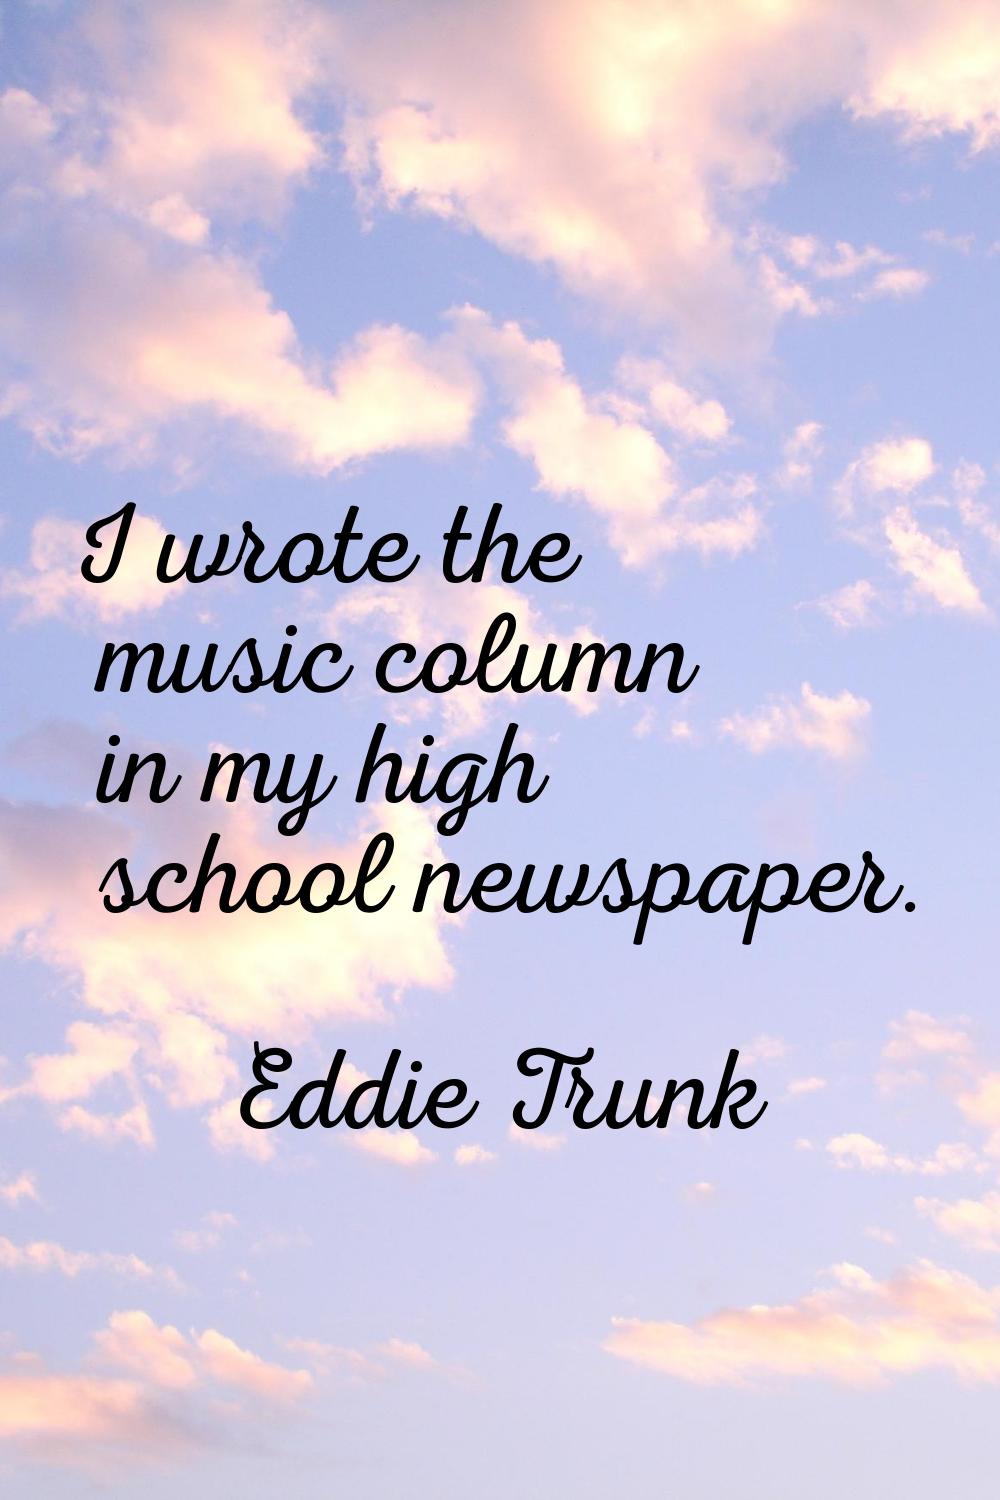 I wrote the music column in my high school newspaper.